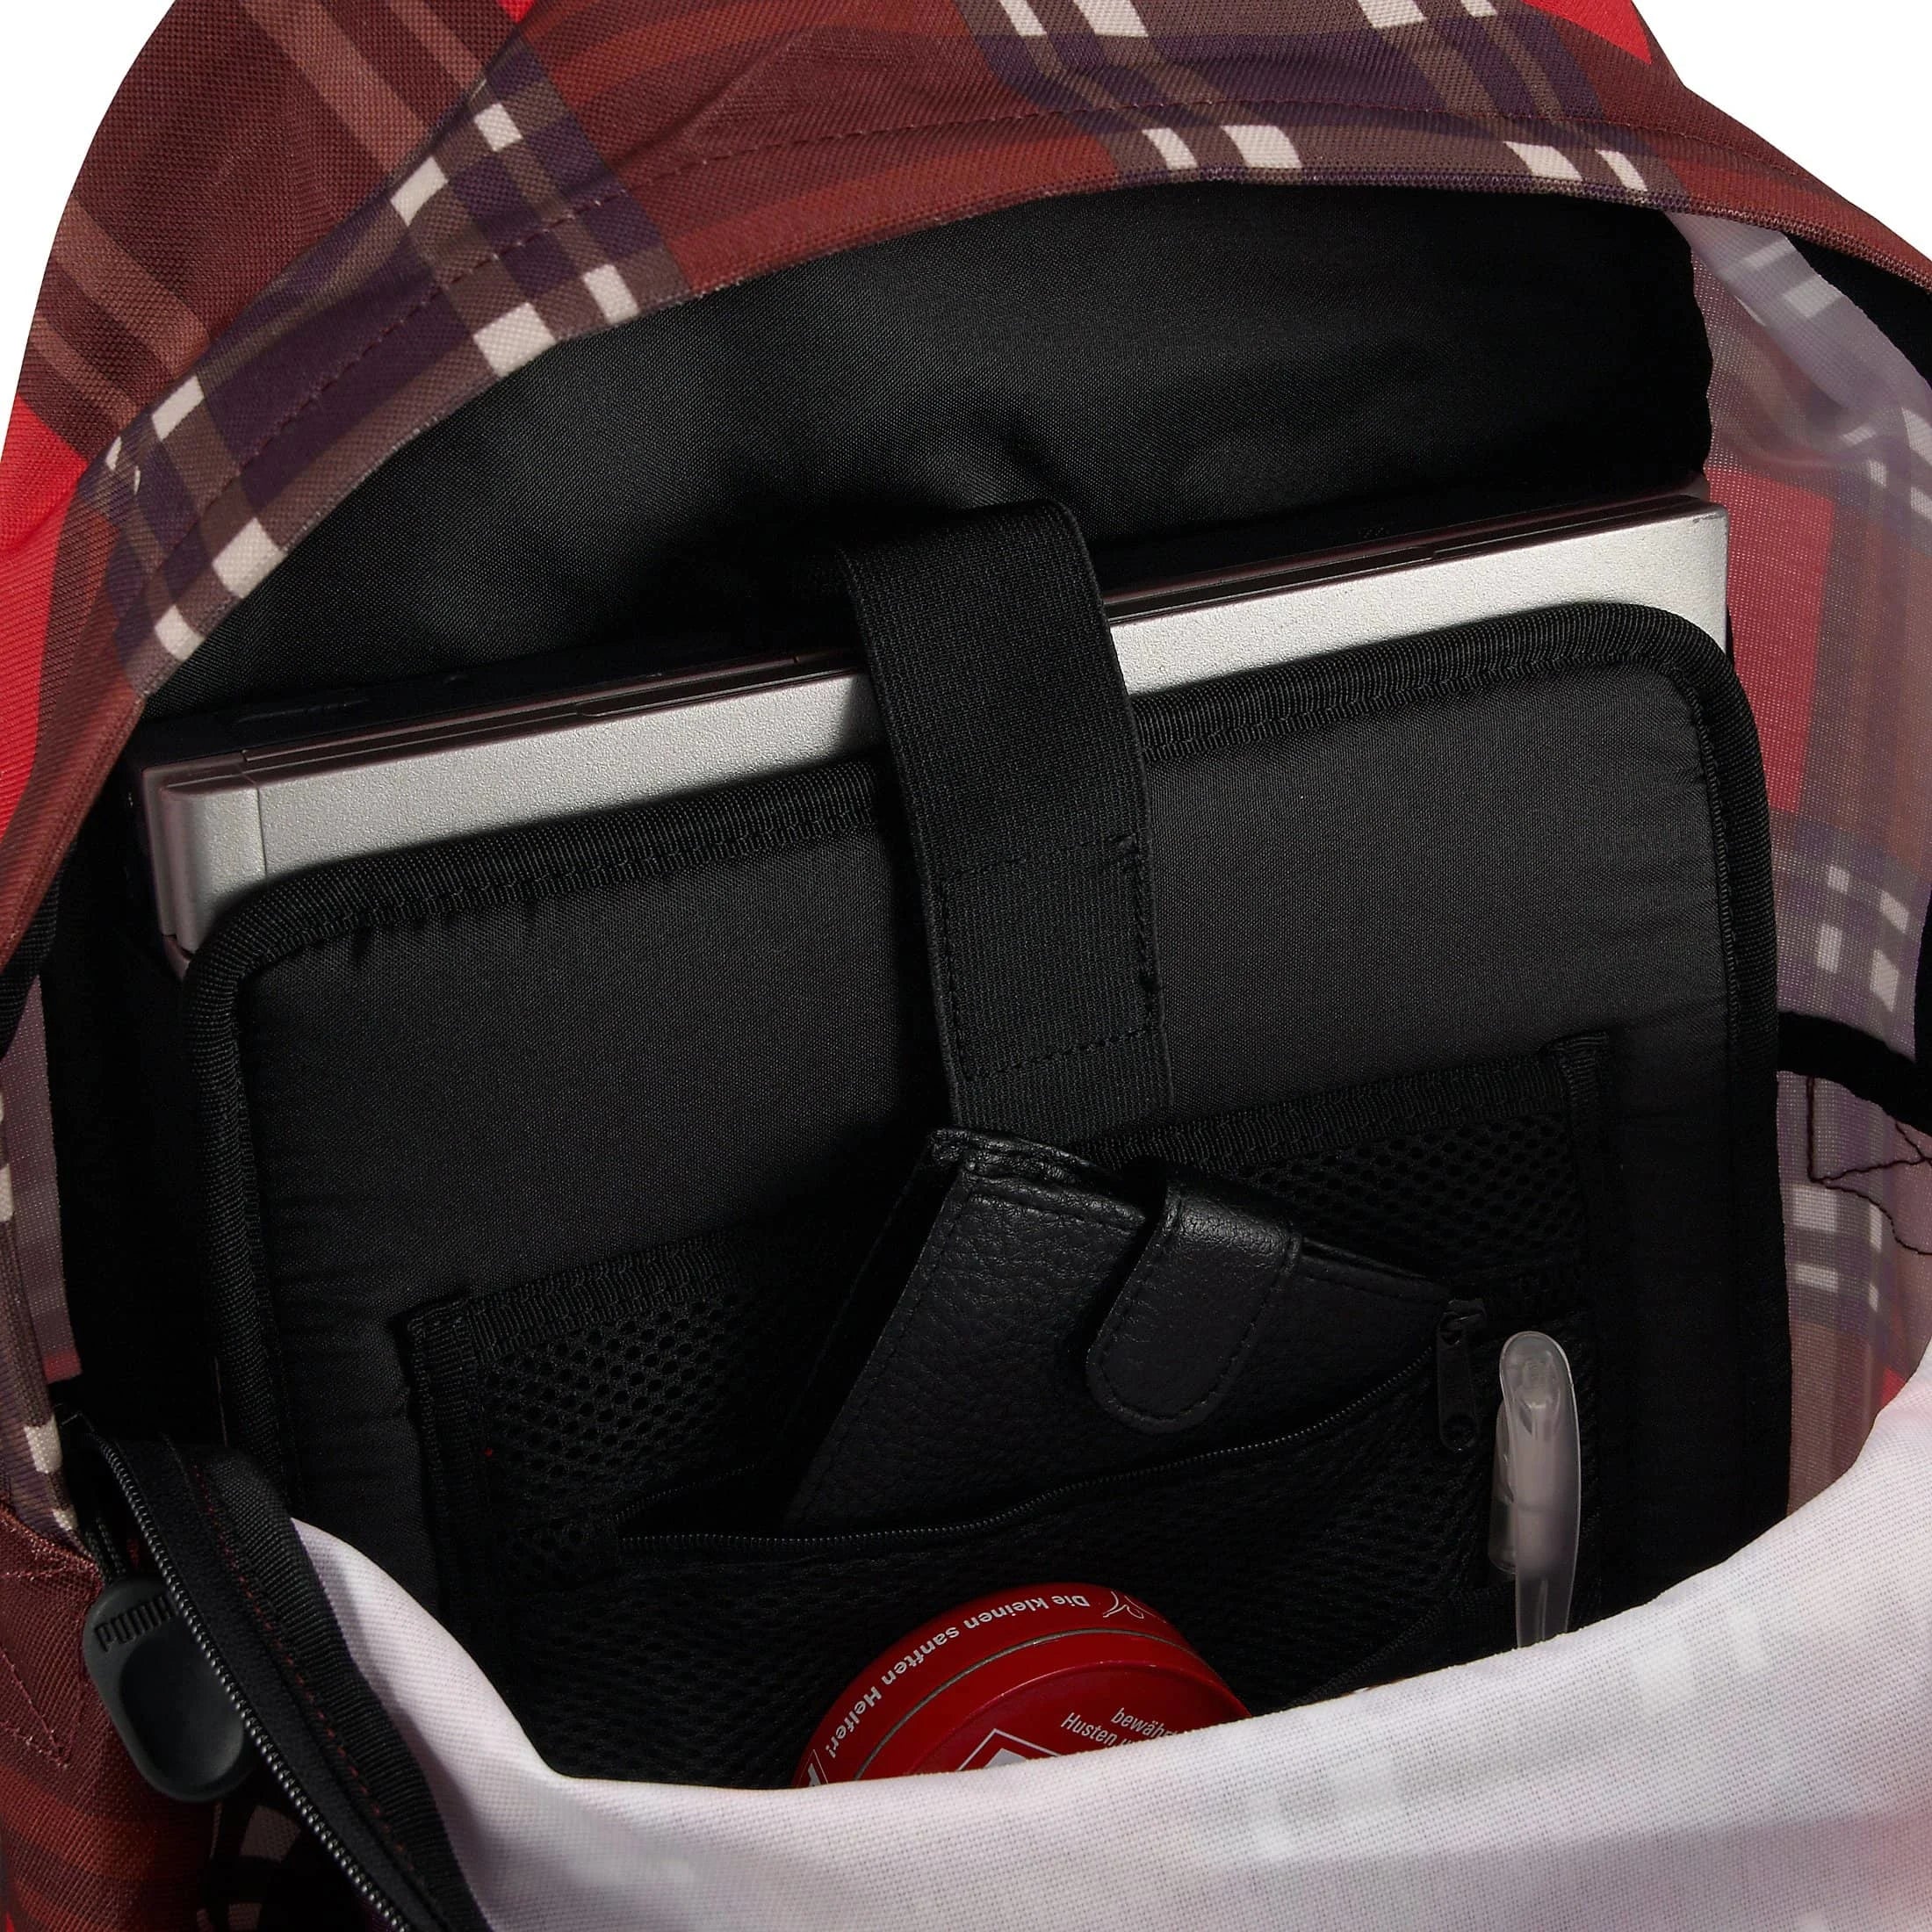 Puma Foundation Laptop Backpack 45 cm - ribbon red-italien plum check